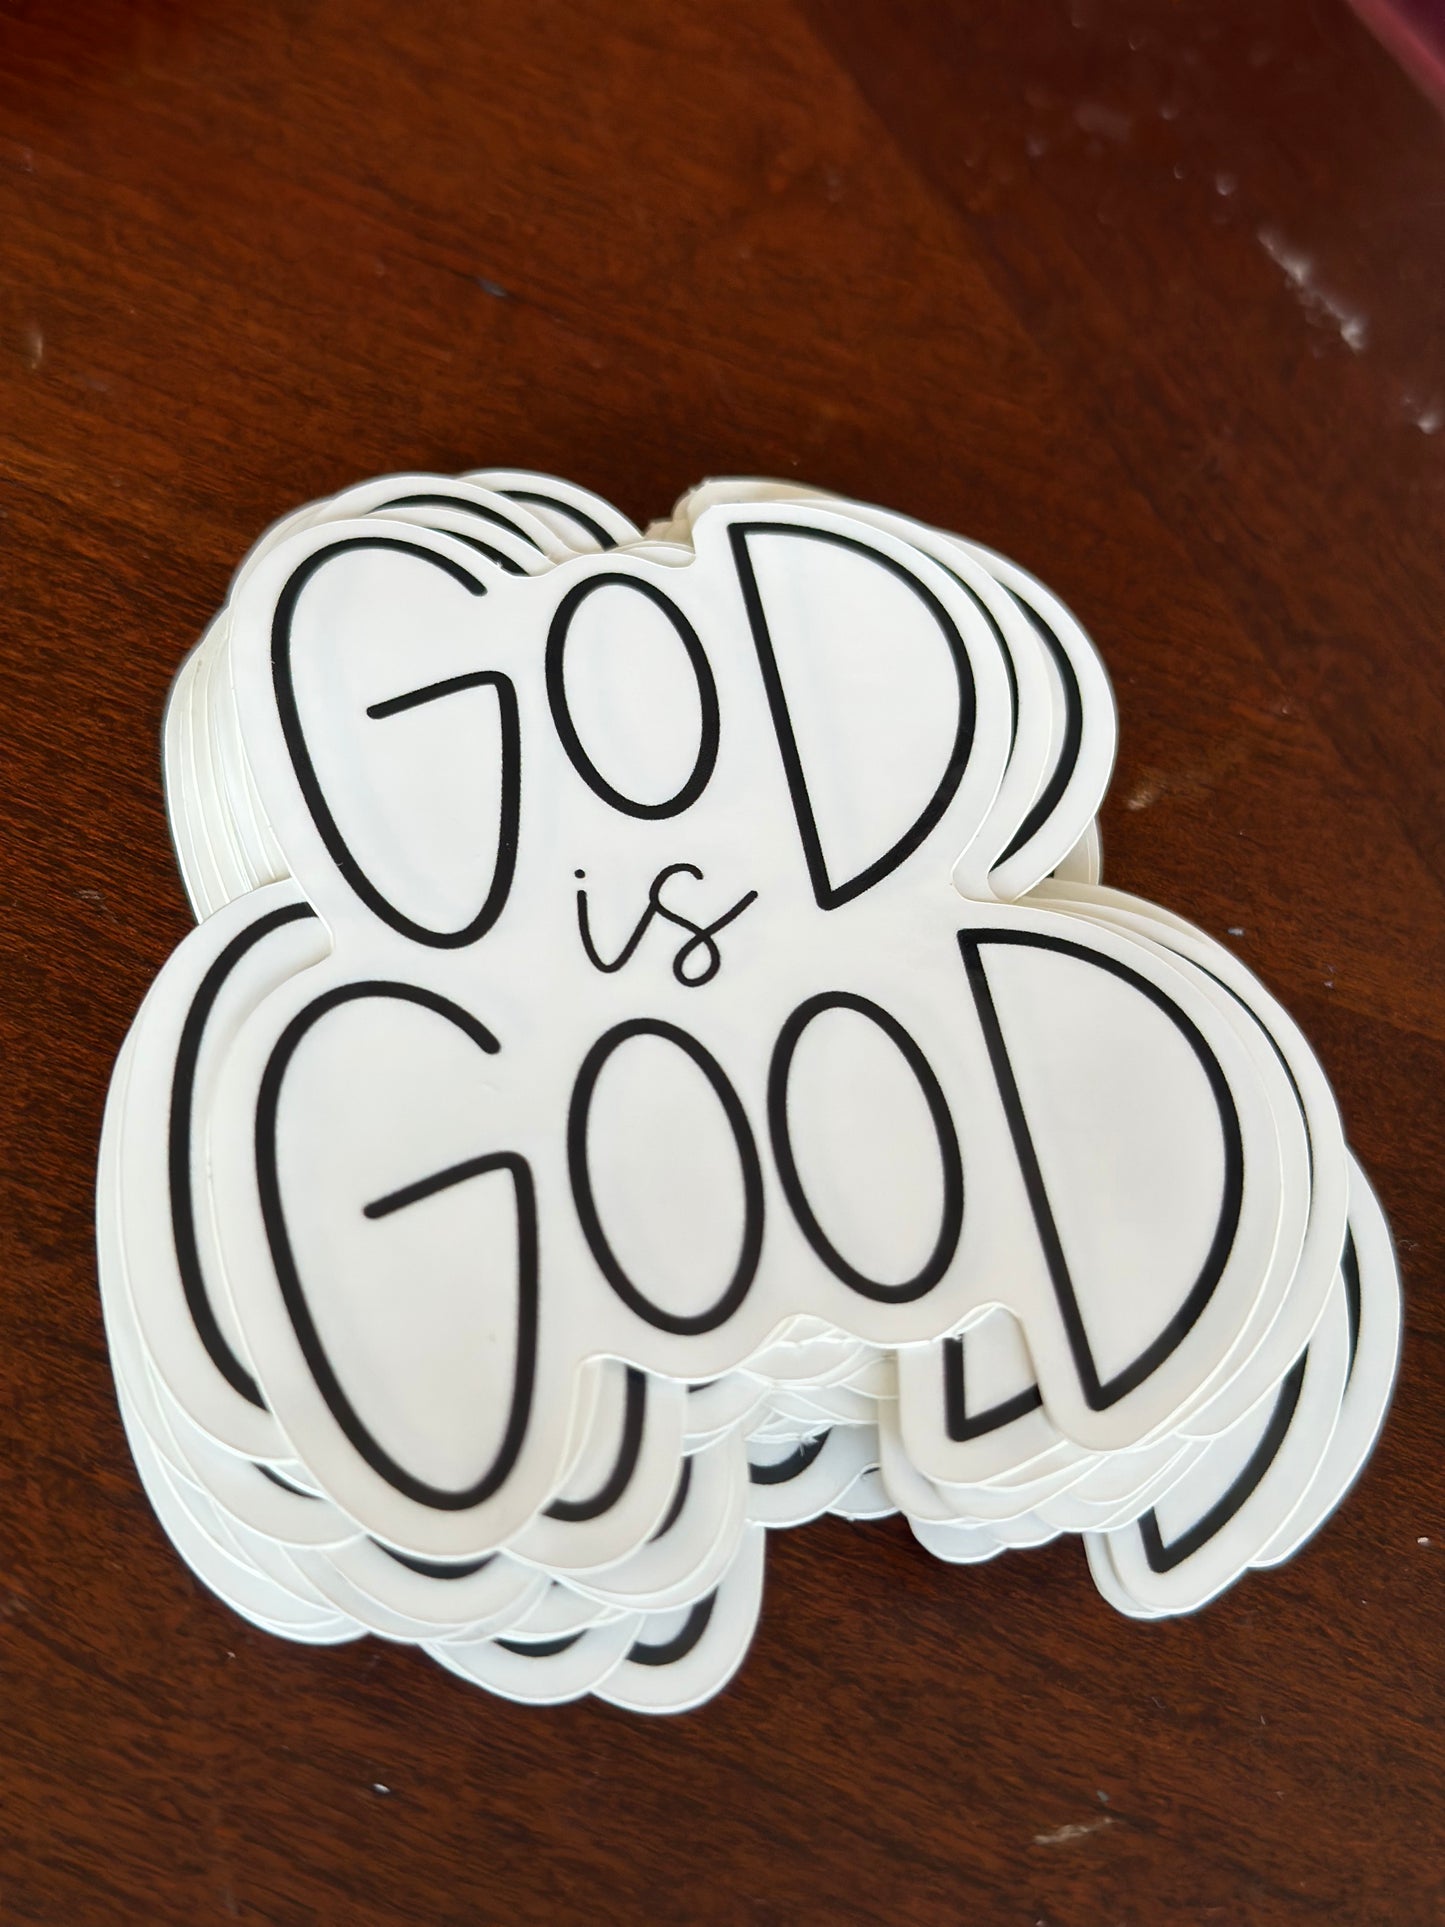 “God is Good” Sticker